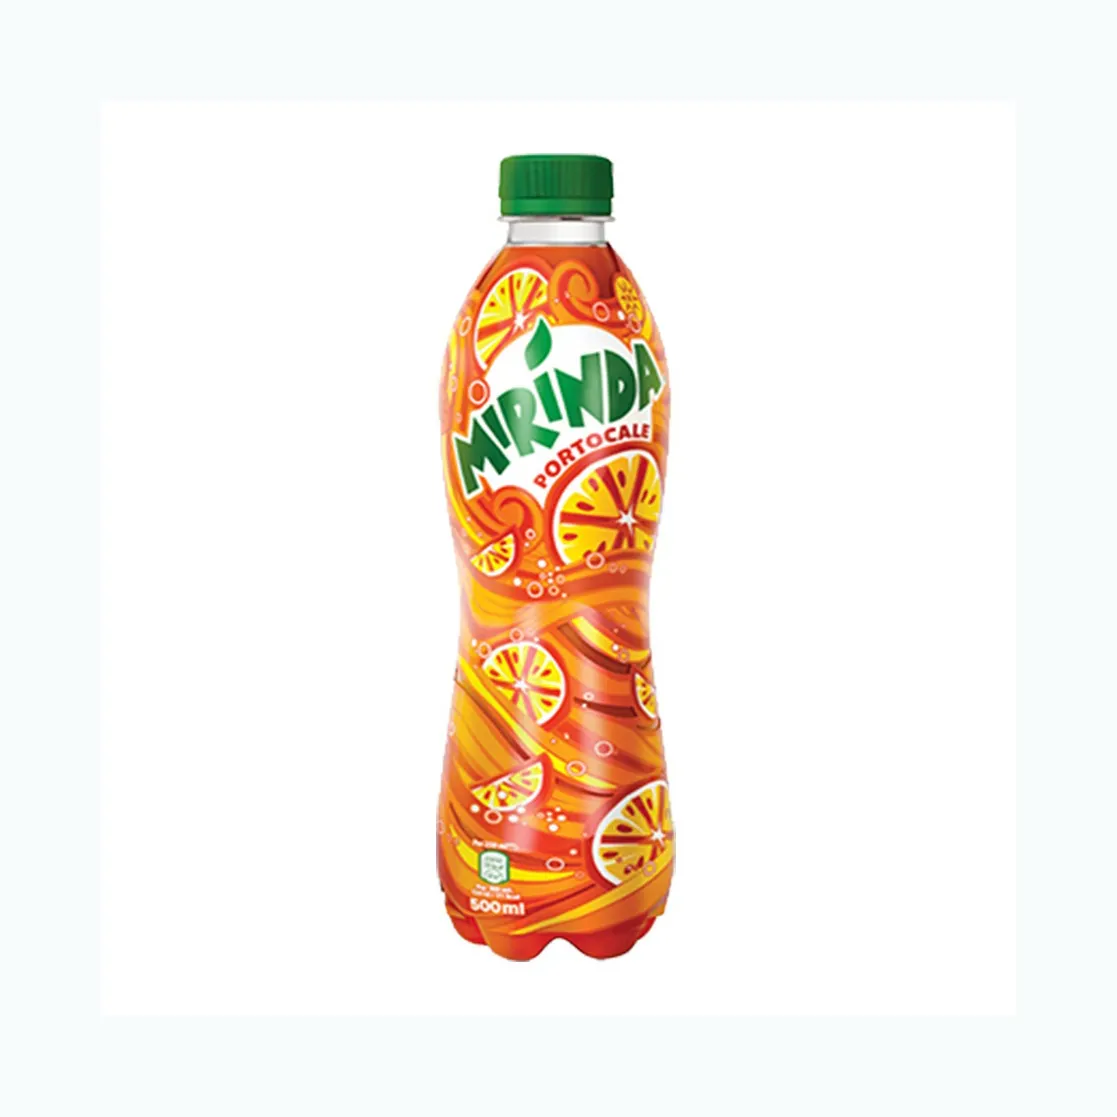 Mirinda Soft Drinks For Sale in bulk at cheap Price/carbonated soft drinks Mirinda fruity drinks 330ml